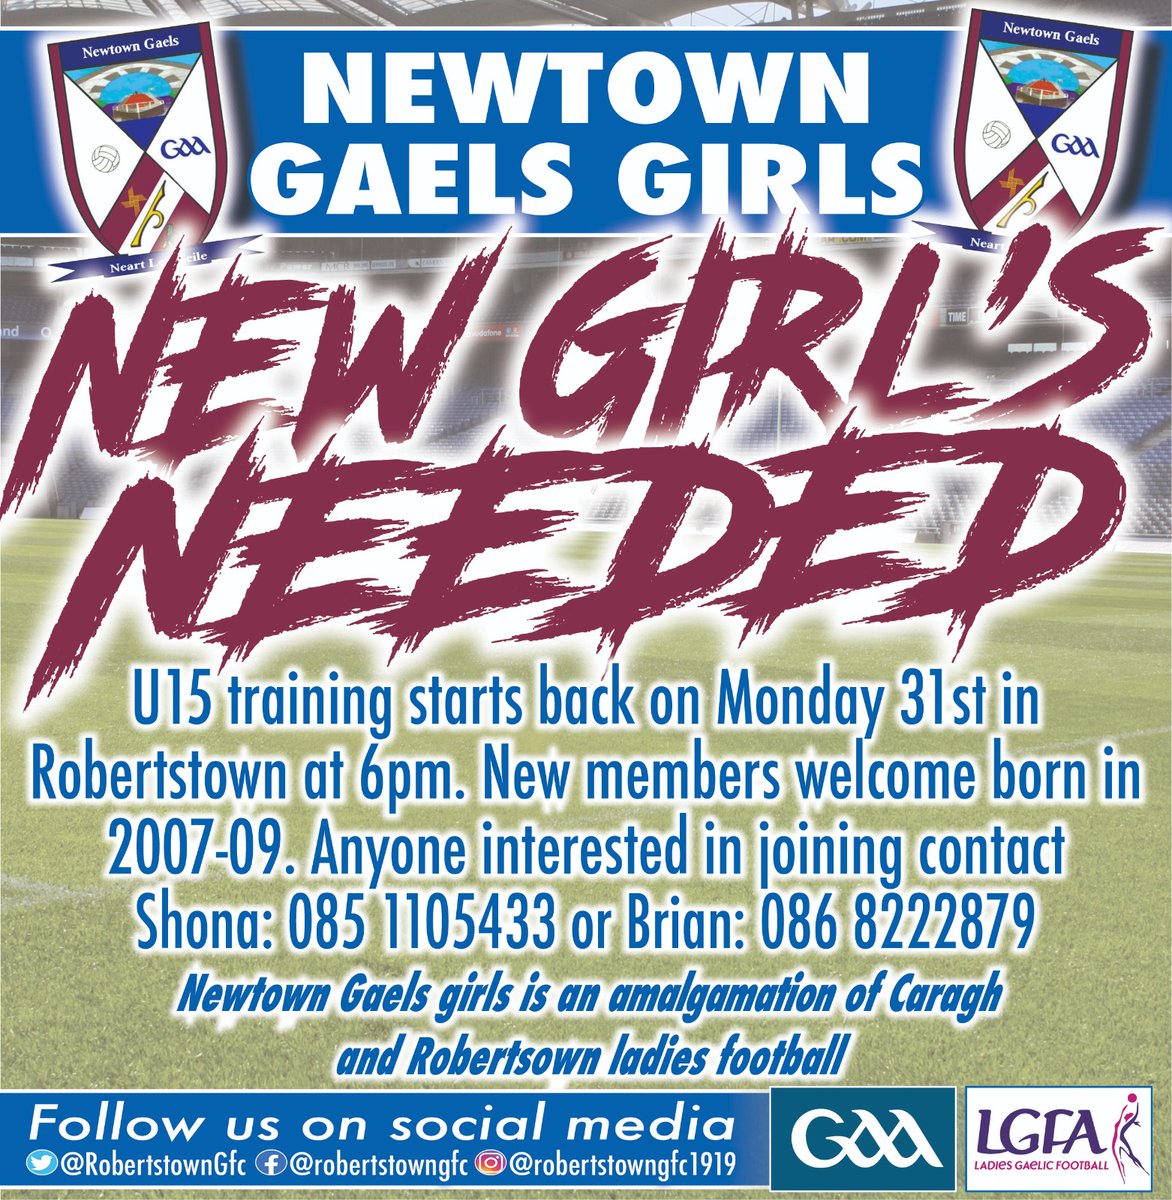 Newtown Gaels girls U15 training starting back Monday 31st in Roberstown at 6pm.
New Members welcome born 2007-09. 
#newbeginings
#supporthersport #newtowngaelsgirls #KildareLGFA
@RobertstownGfc @Caragh_GFC @KildareLGFA1 @NGaels